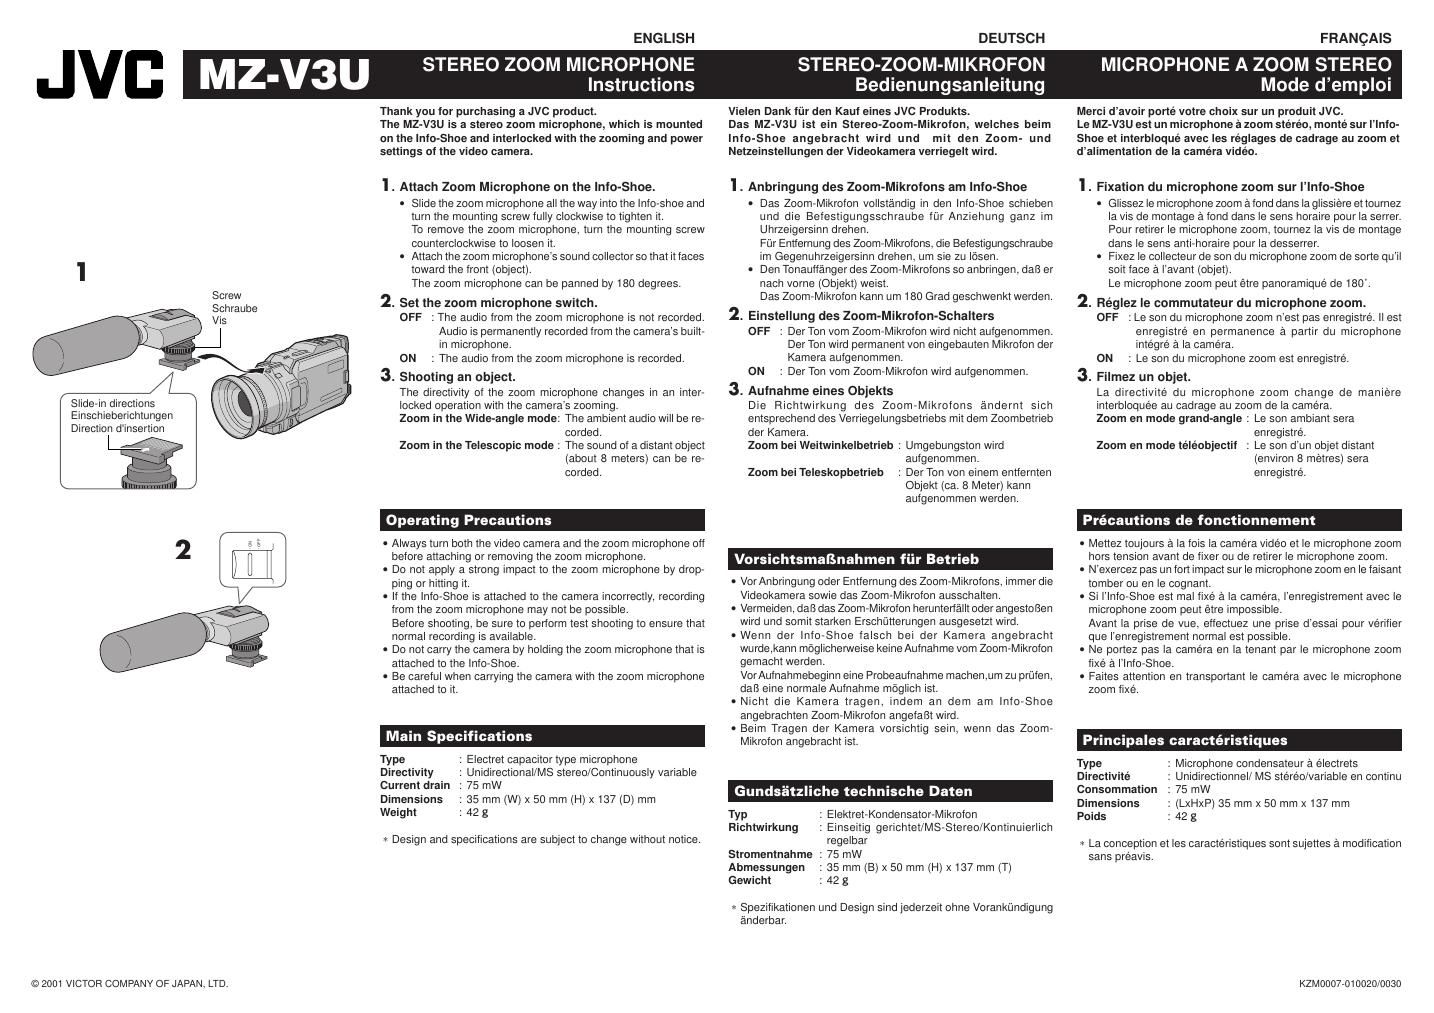 Jvc VLV 3 UE Owners Manual